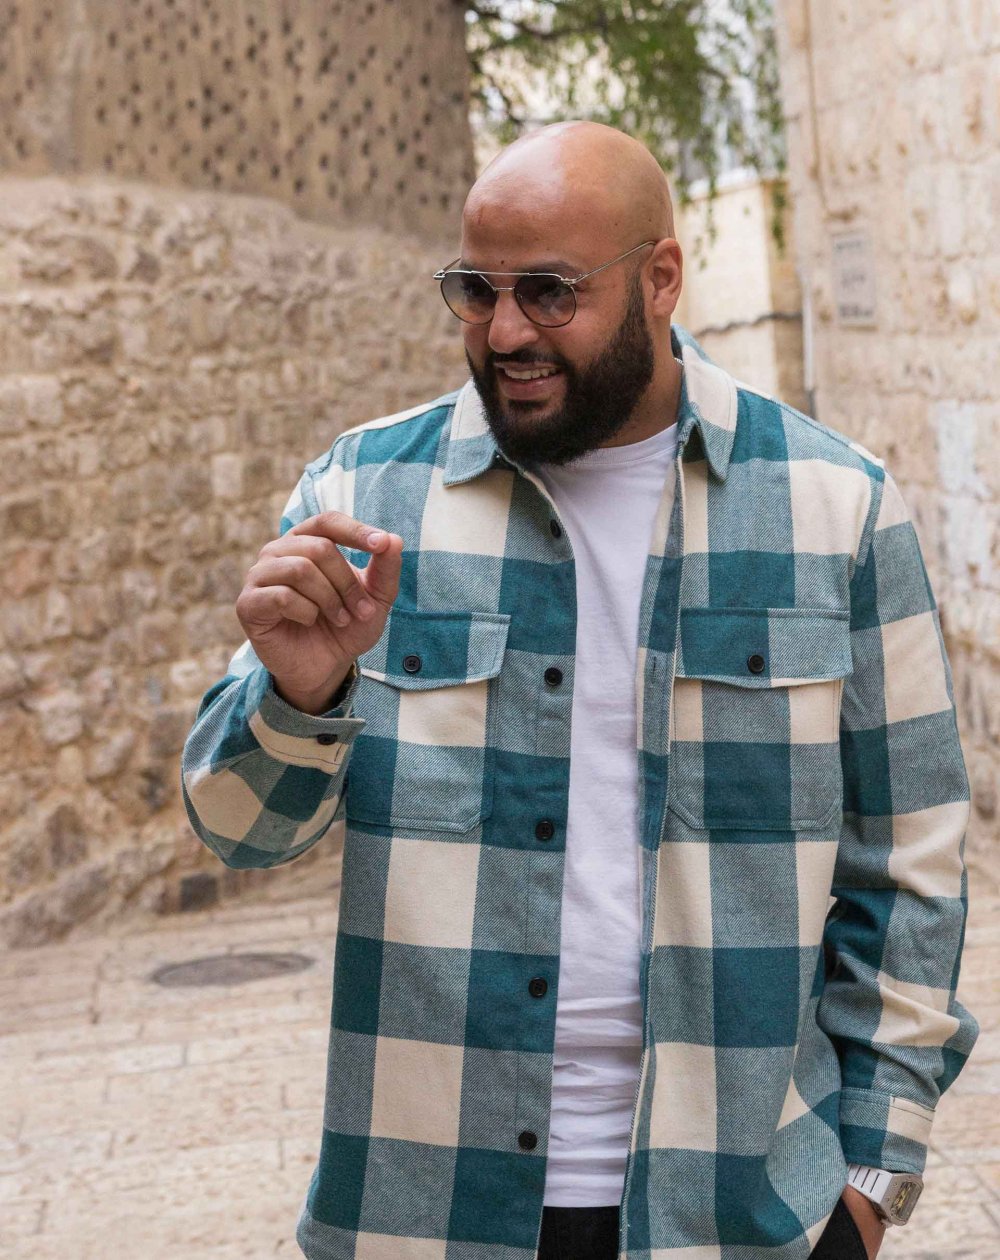 Palestinian rapper Ahmad Abu Baker talks about hip-hop themes in Jerusalem life.